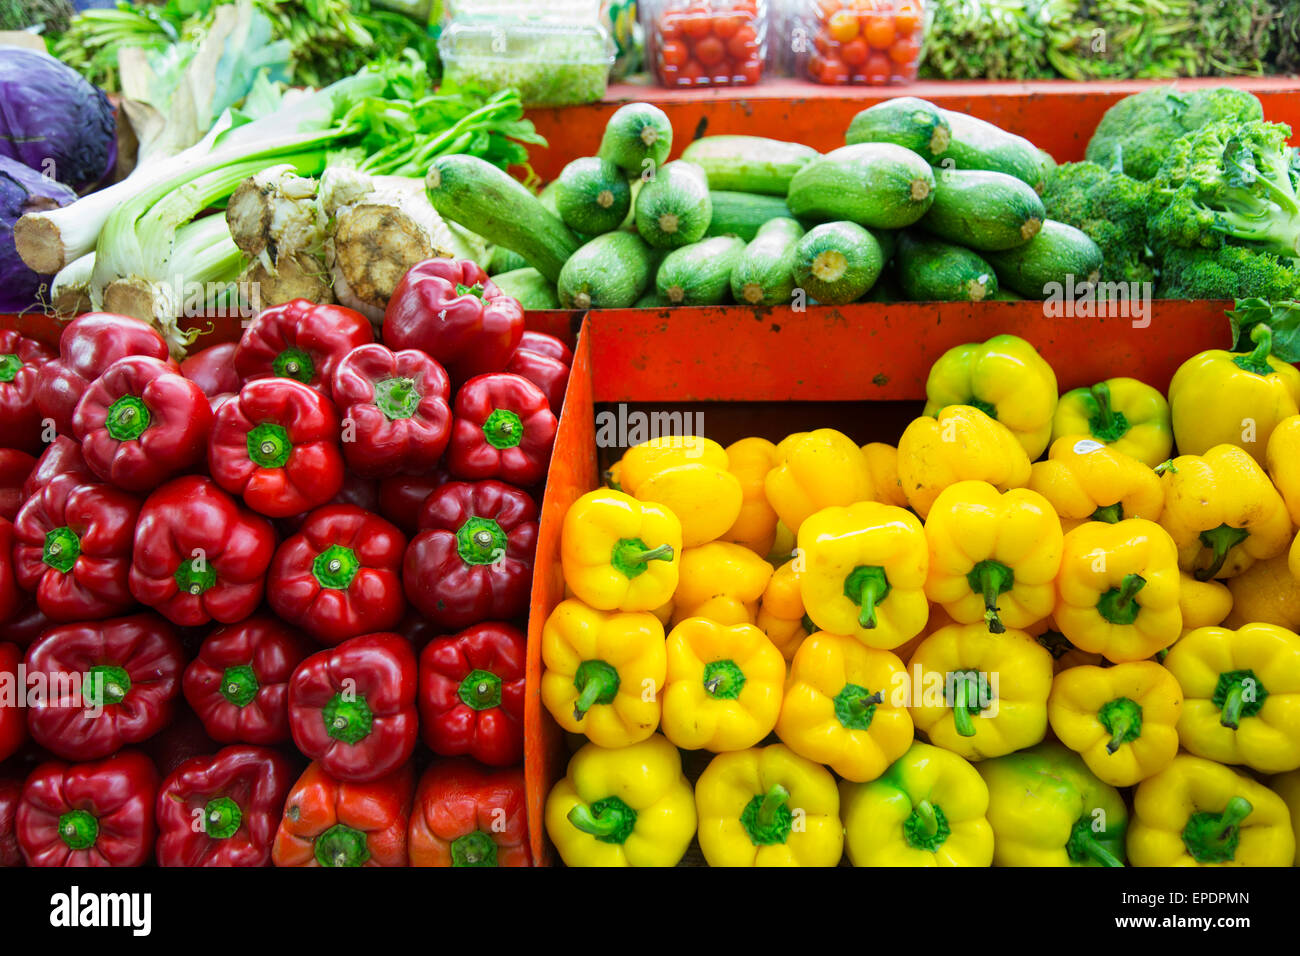 Marché de Fruits et légumes, aliments Vallarta Tours, El Pitillal, Puerto Vallarta, Jalisco, Mexique Banque D'Images